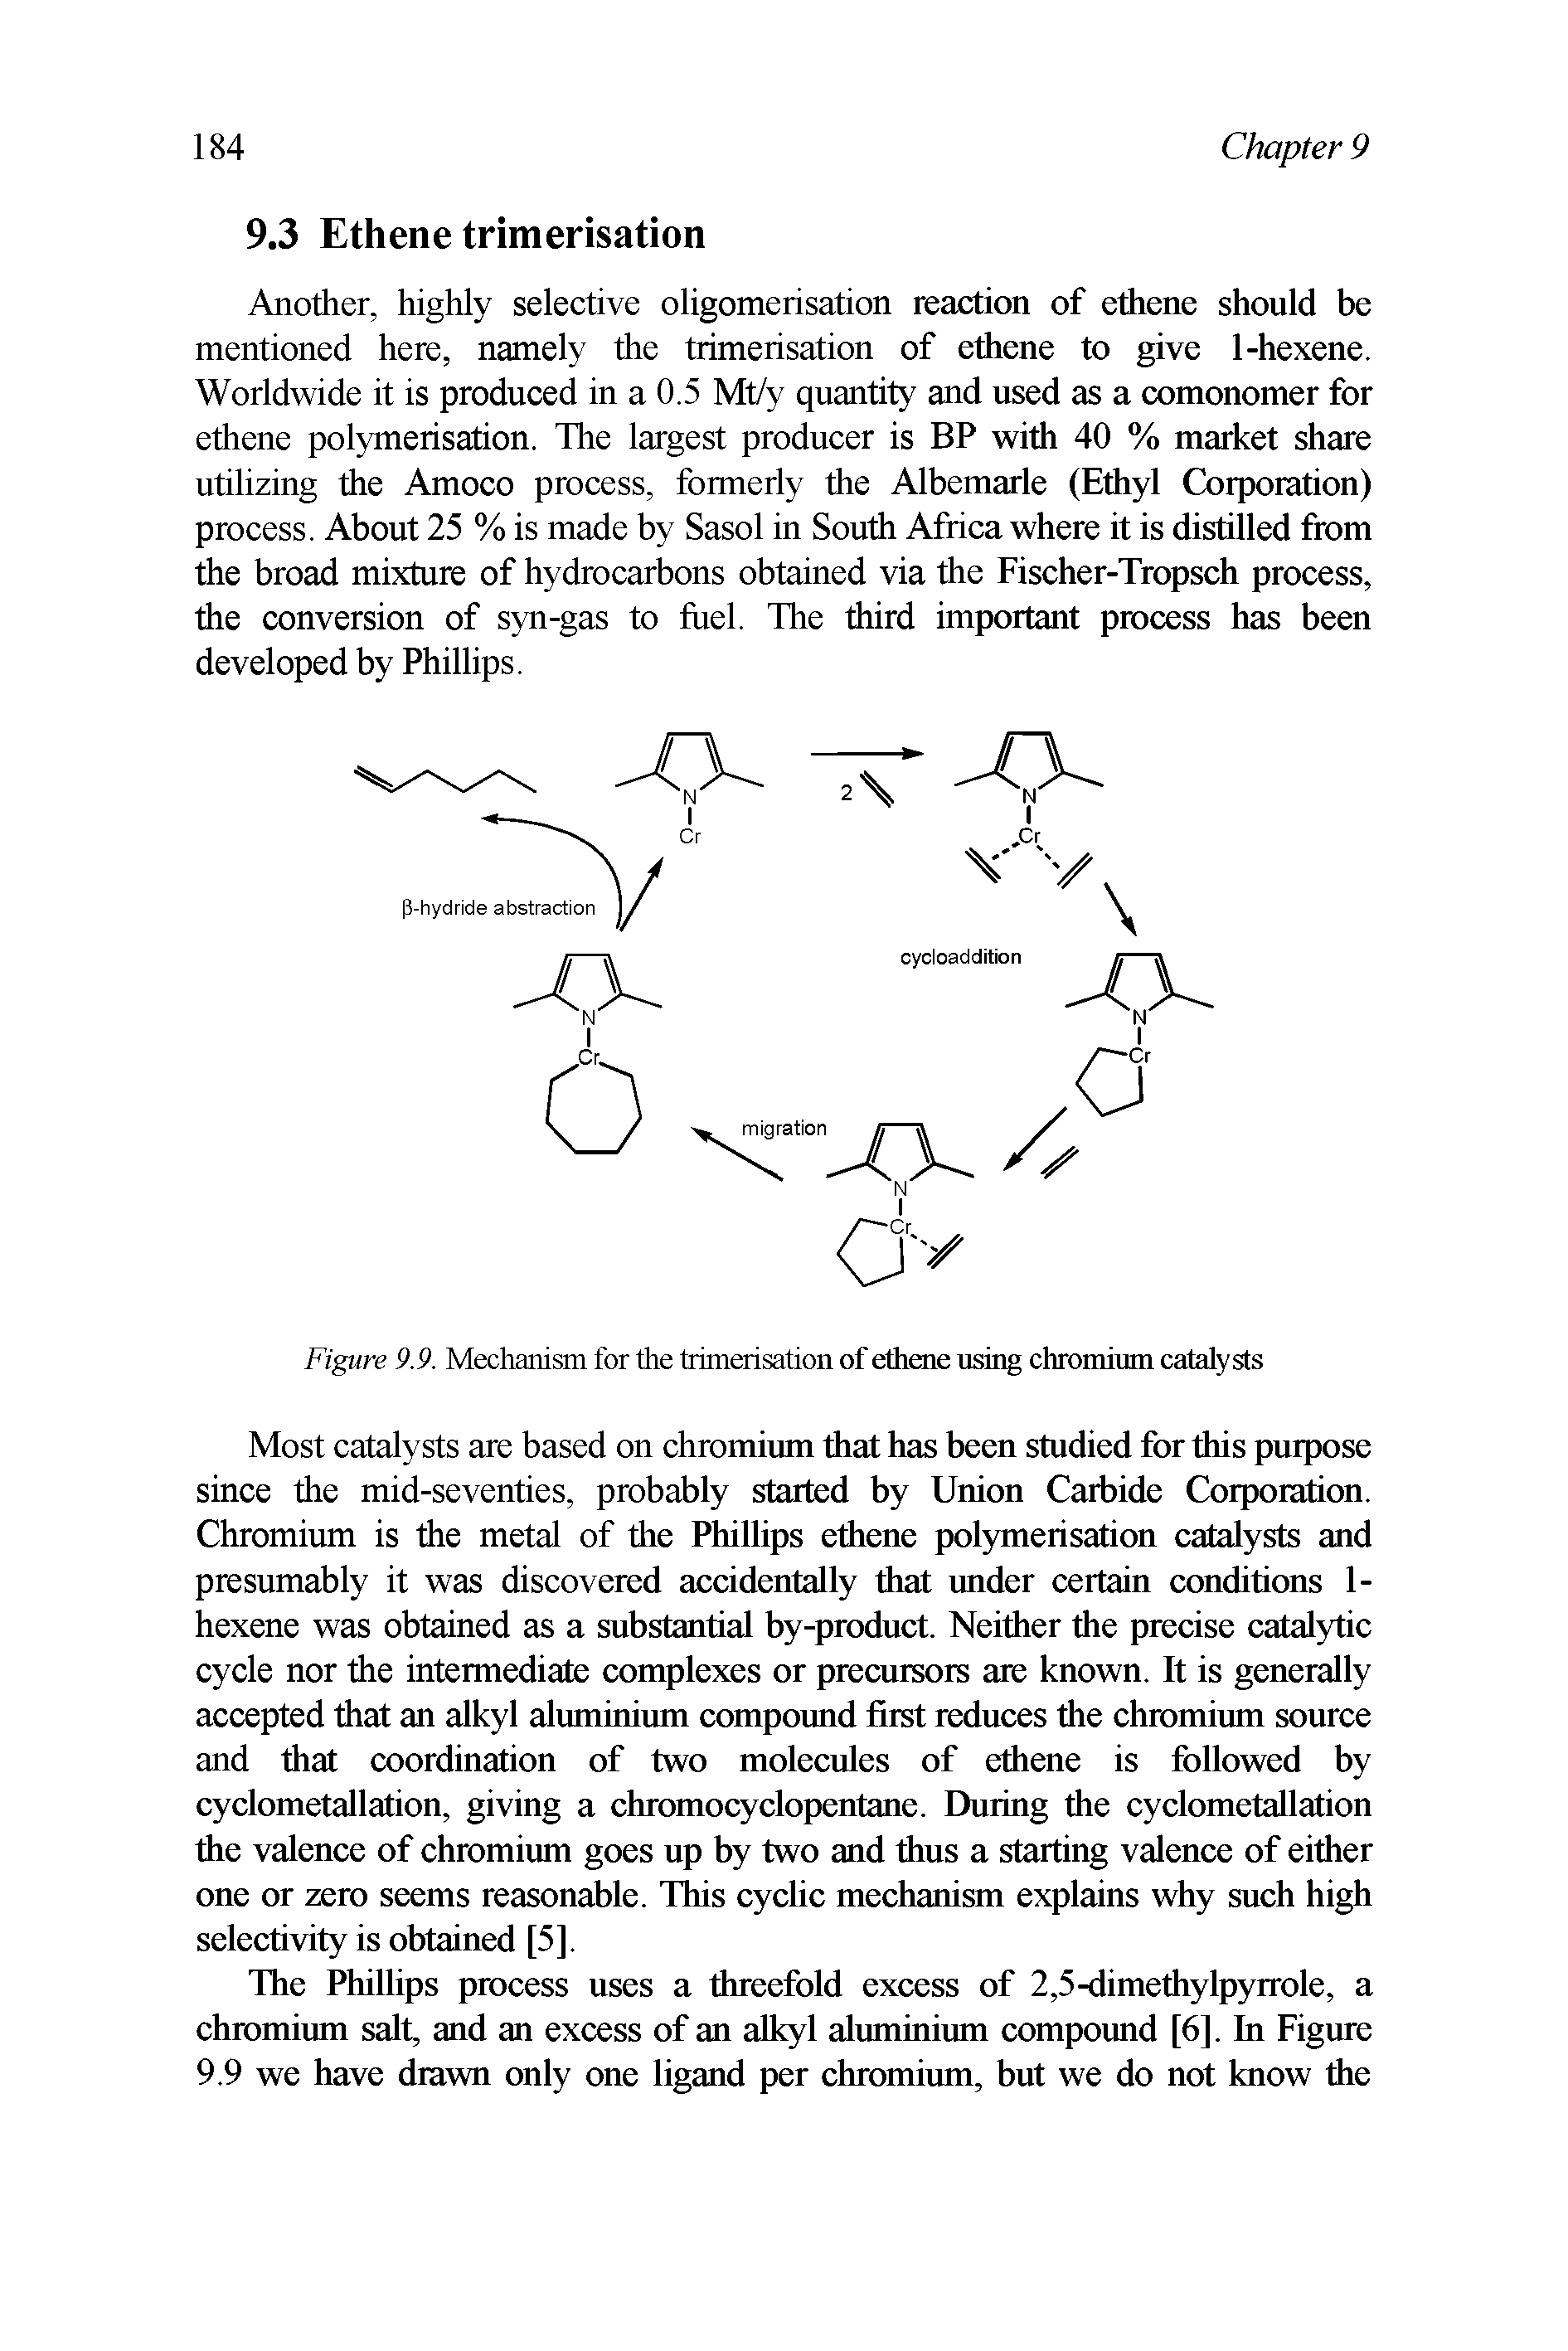 Figure 9.9. Mechanism for the trimerisation of ethene using chromium catalysts...